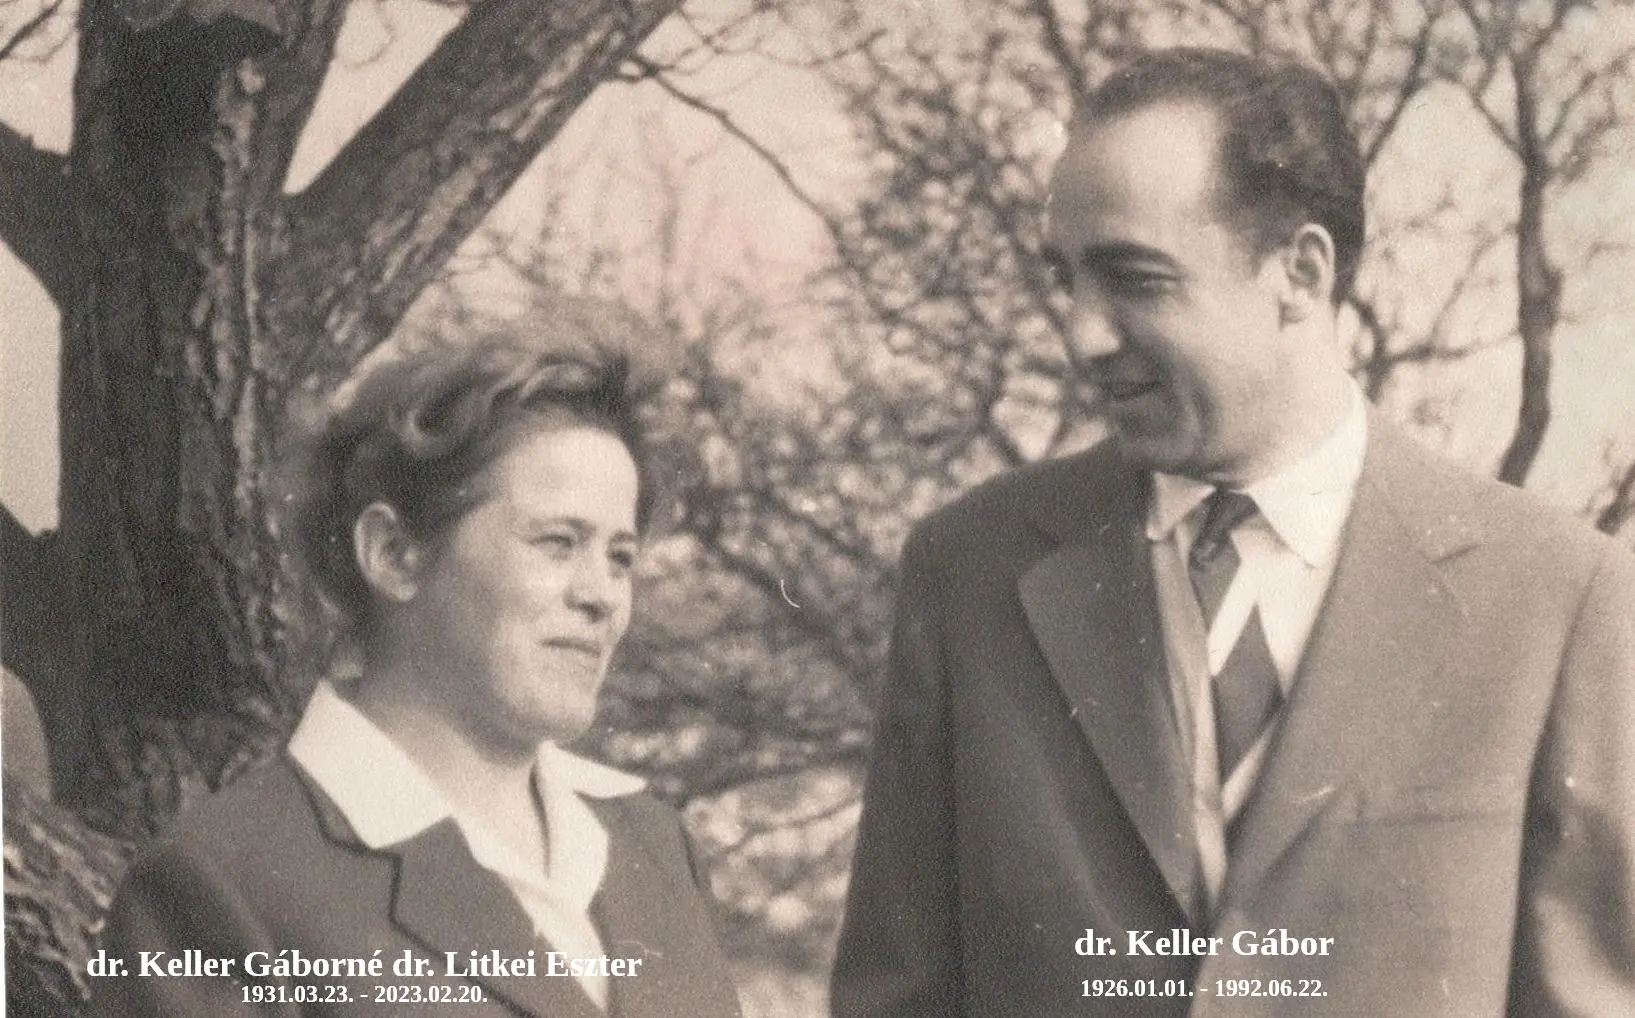 In memoriam dr. Keller Gáborné dr. Litkei Eszter & dr. Keller Gábor